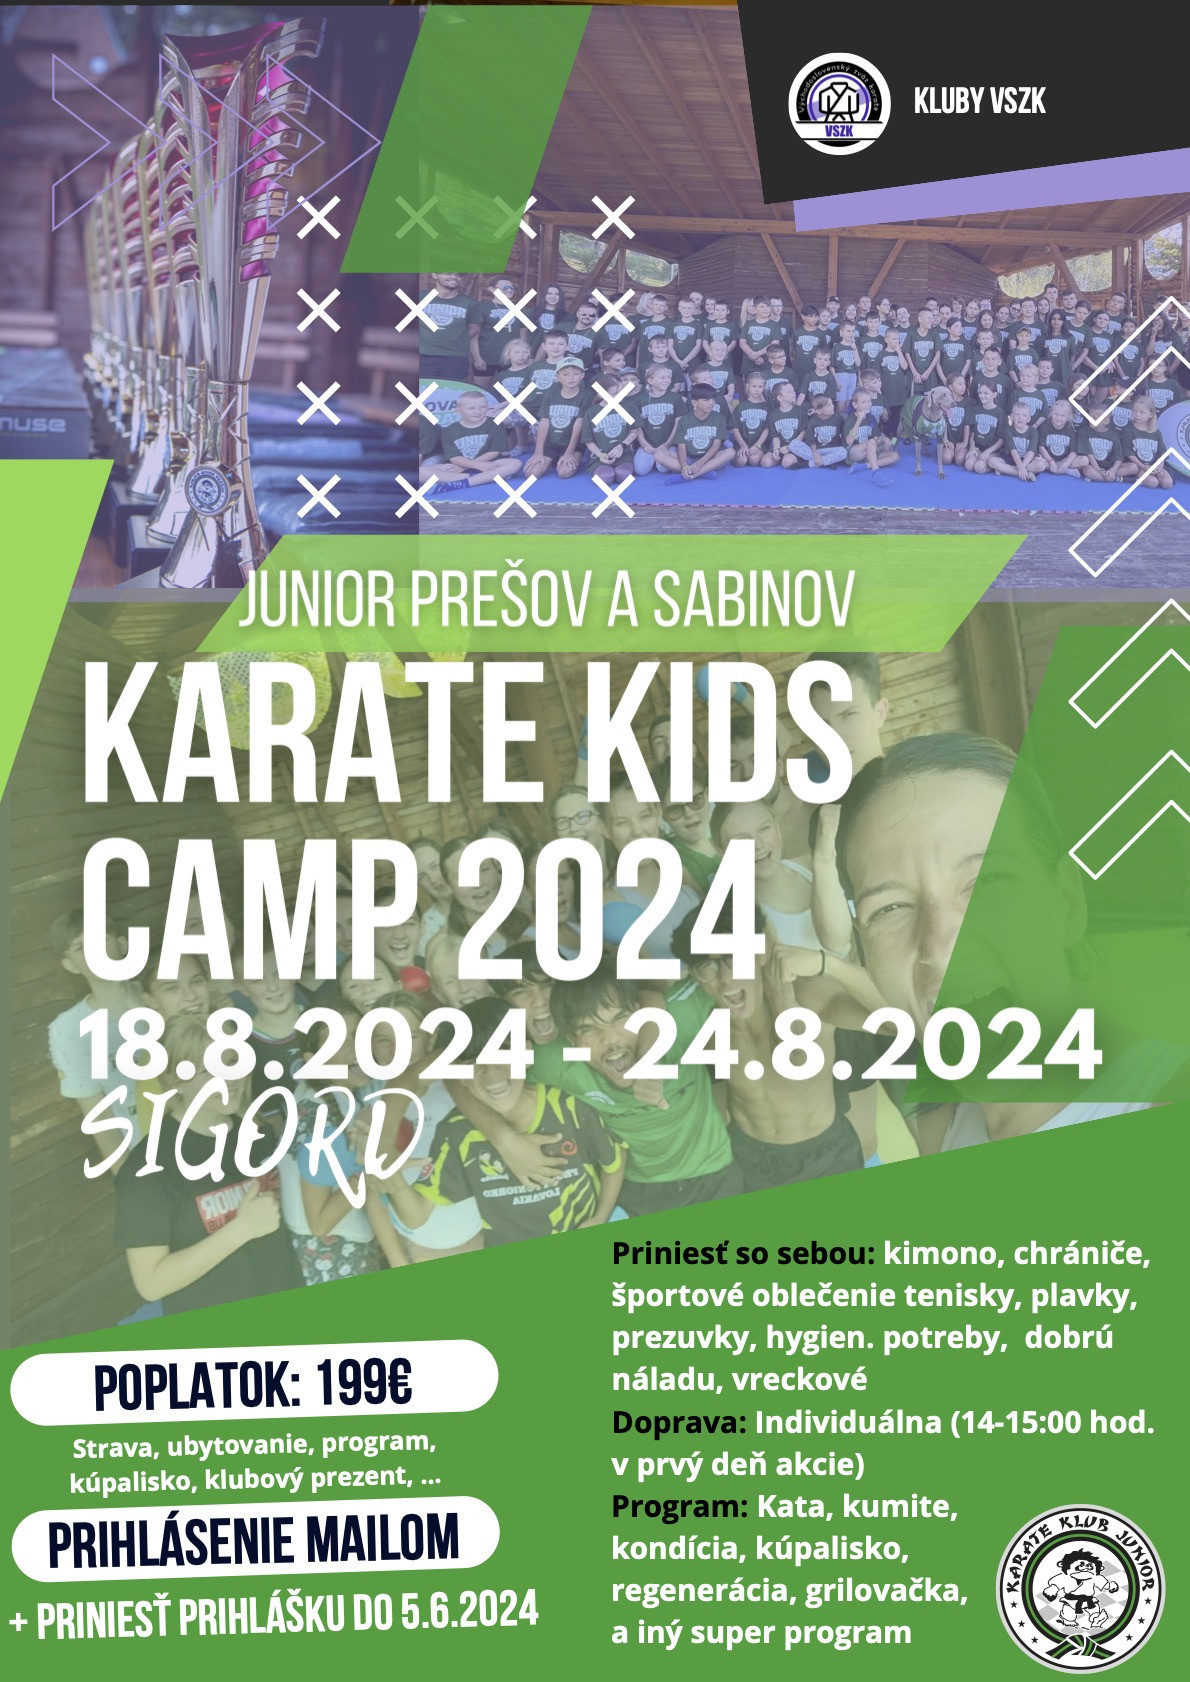 JPEG KARATE KIDS CAMP 2024 plagát .jpg-img